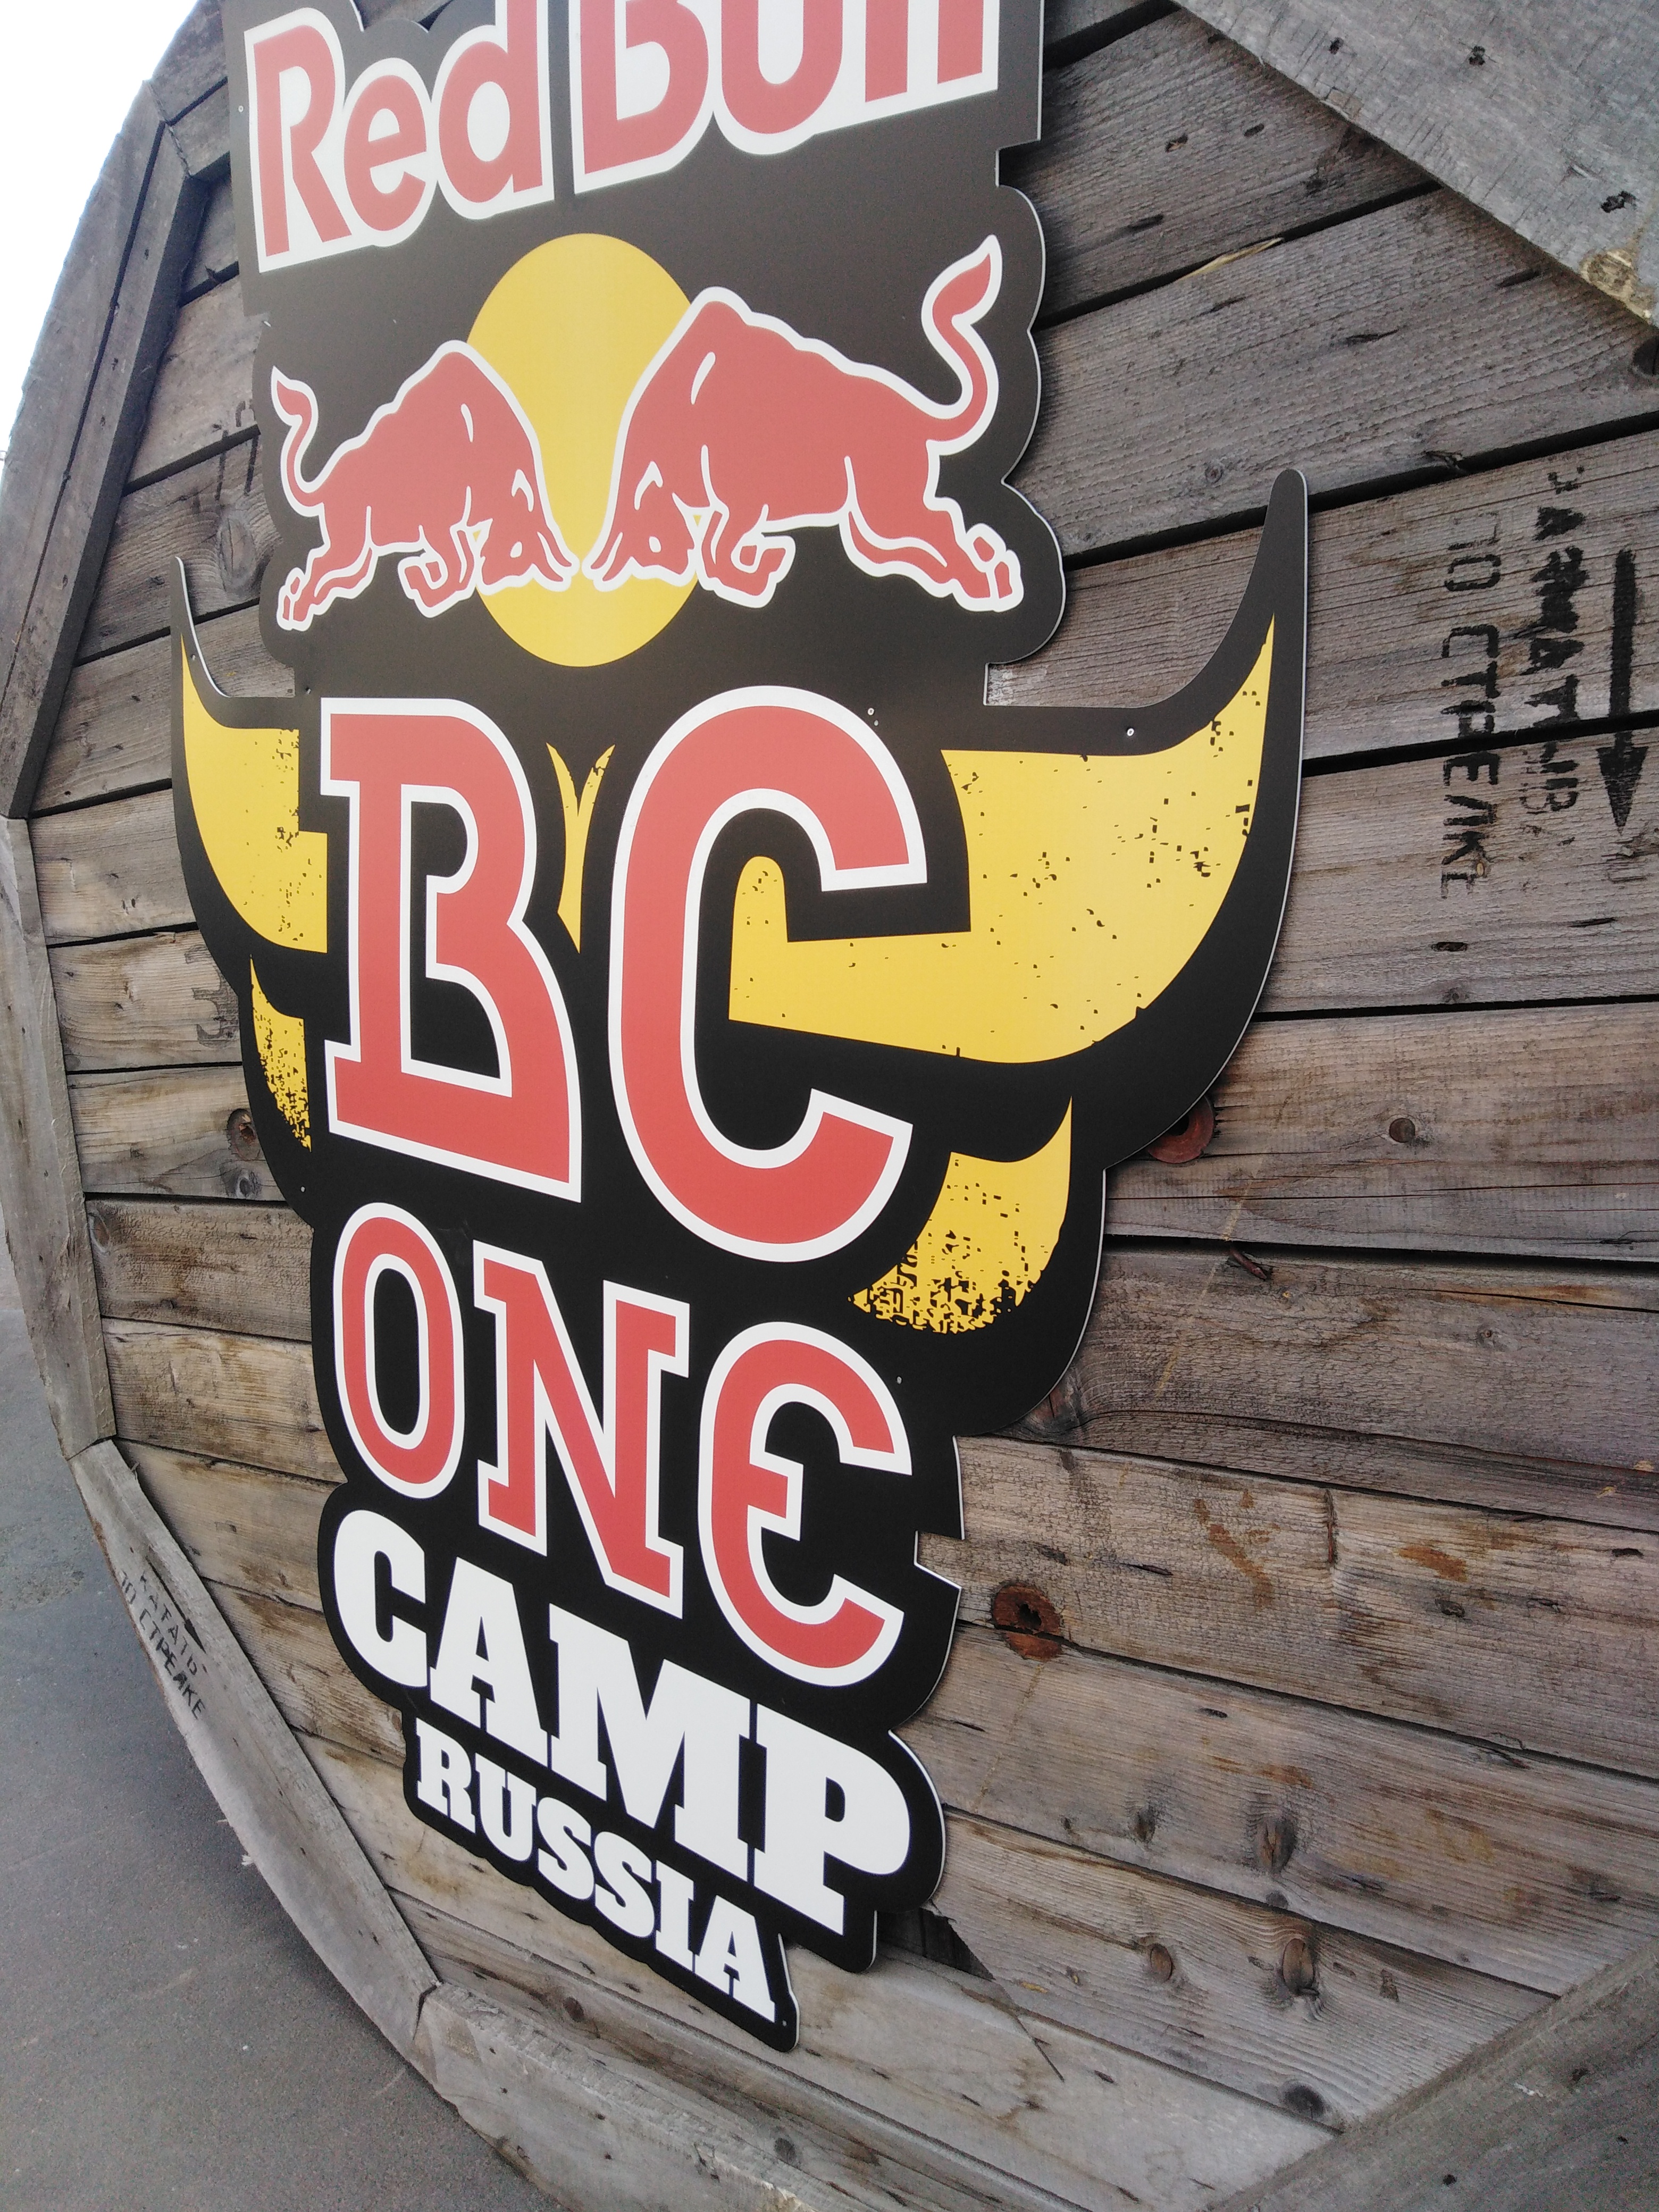 Репортаж с фестиваля Red Bull BC ONE CAMP 2019